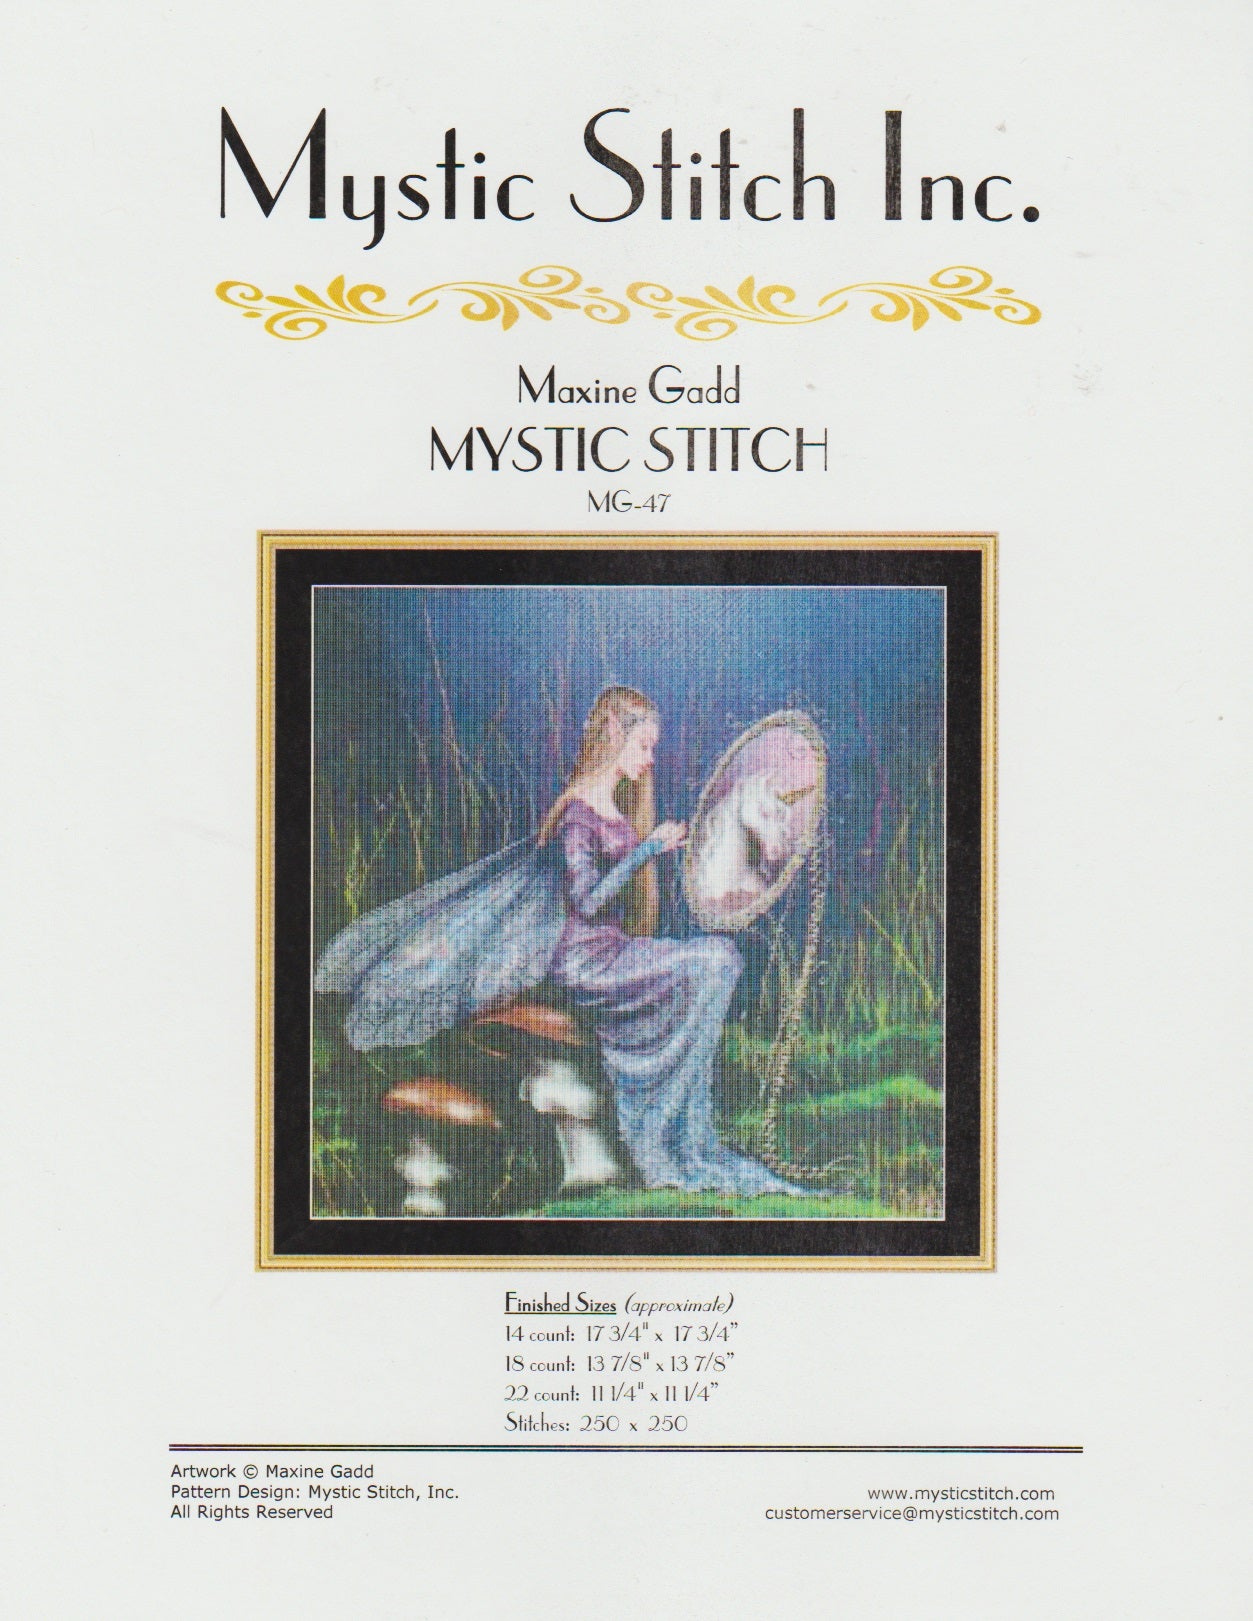 Mystic Stitch Mystic Stitch Maxine Gadd MG-47 cross stitch pattern